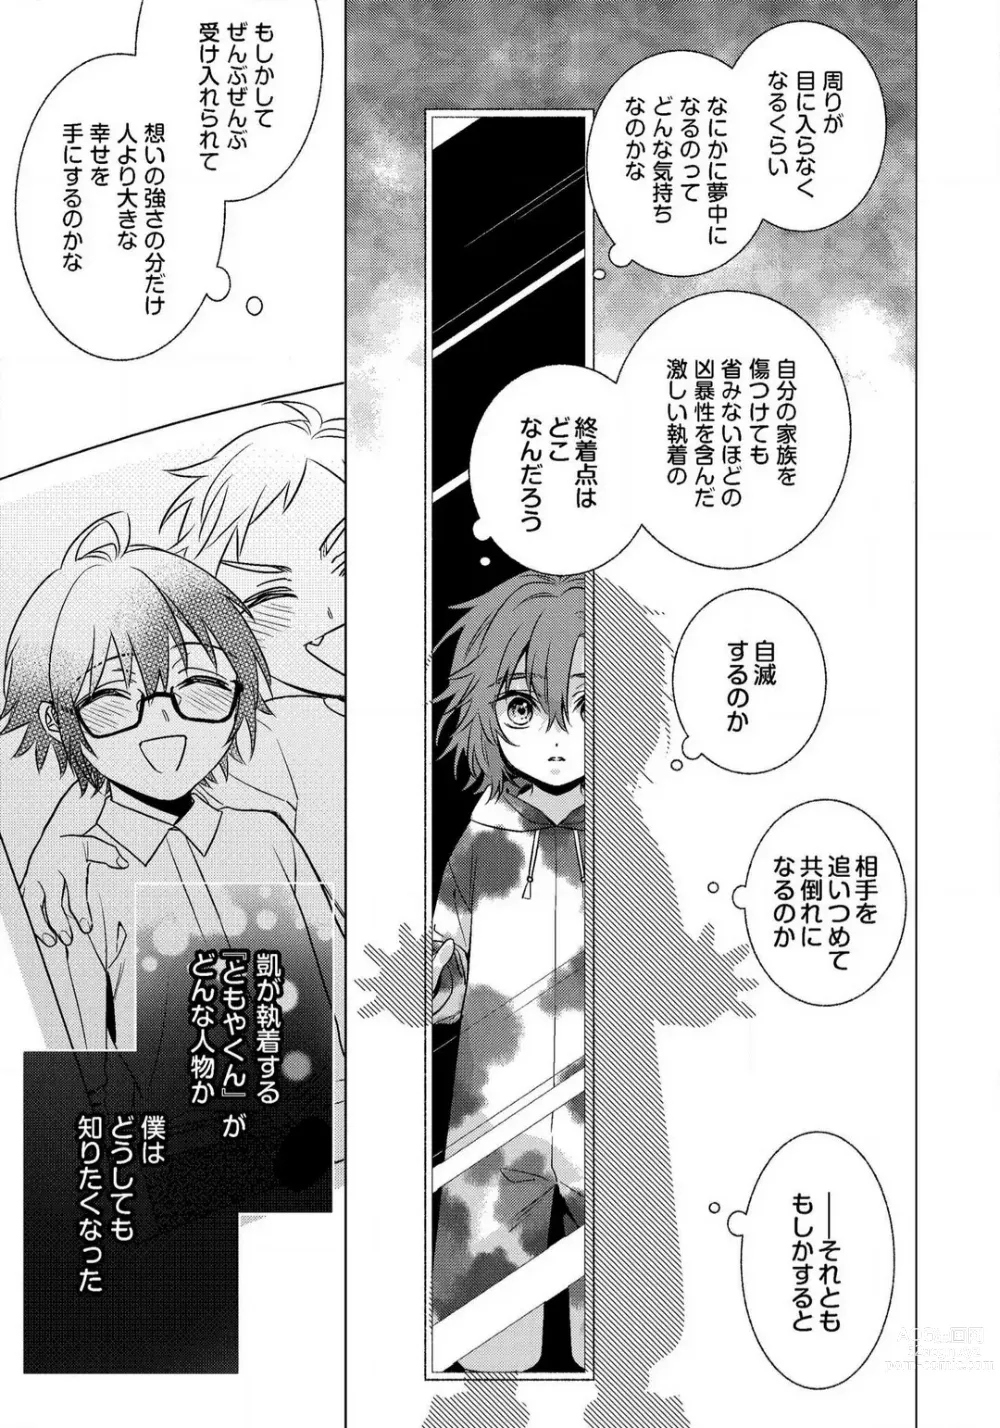 Page 23 of manga Ijimerare - Onna